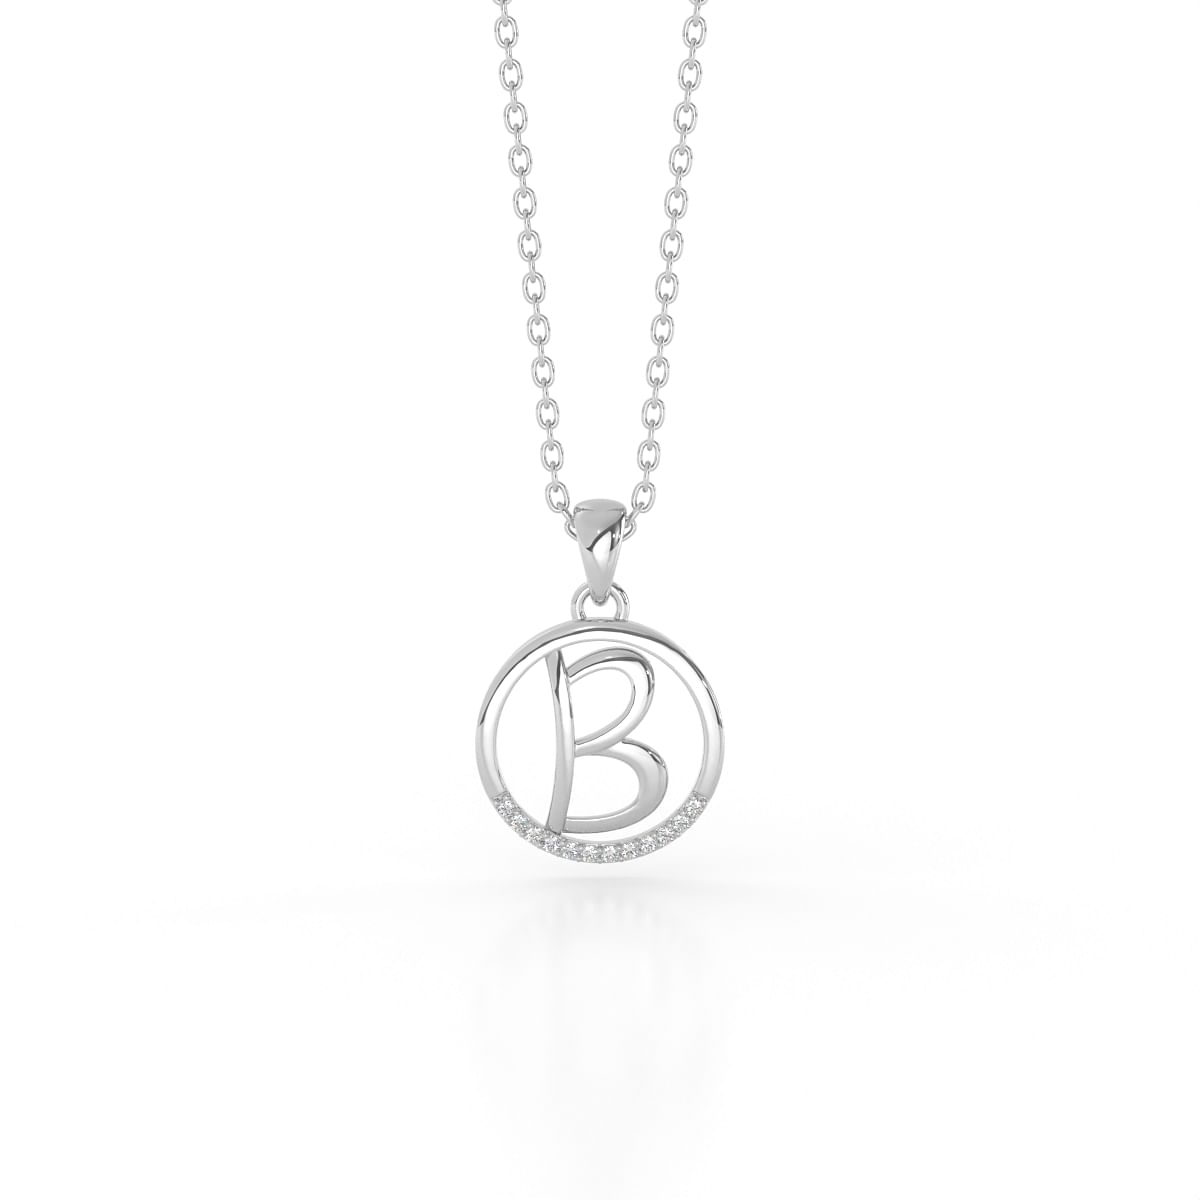 B Letter Round Design White Gold Diamond Pendant